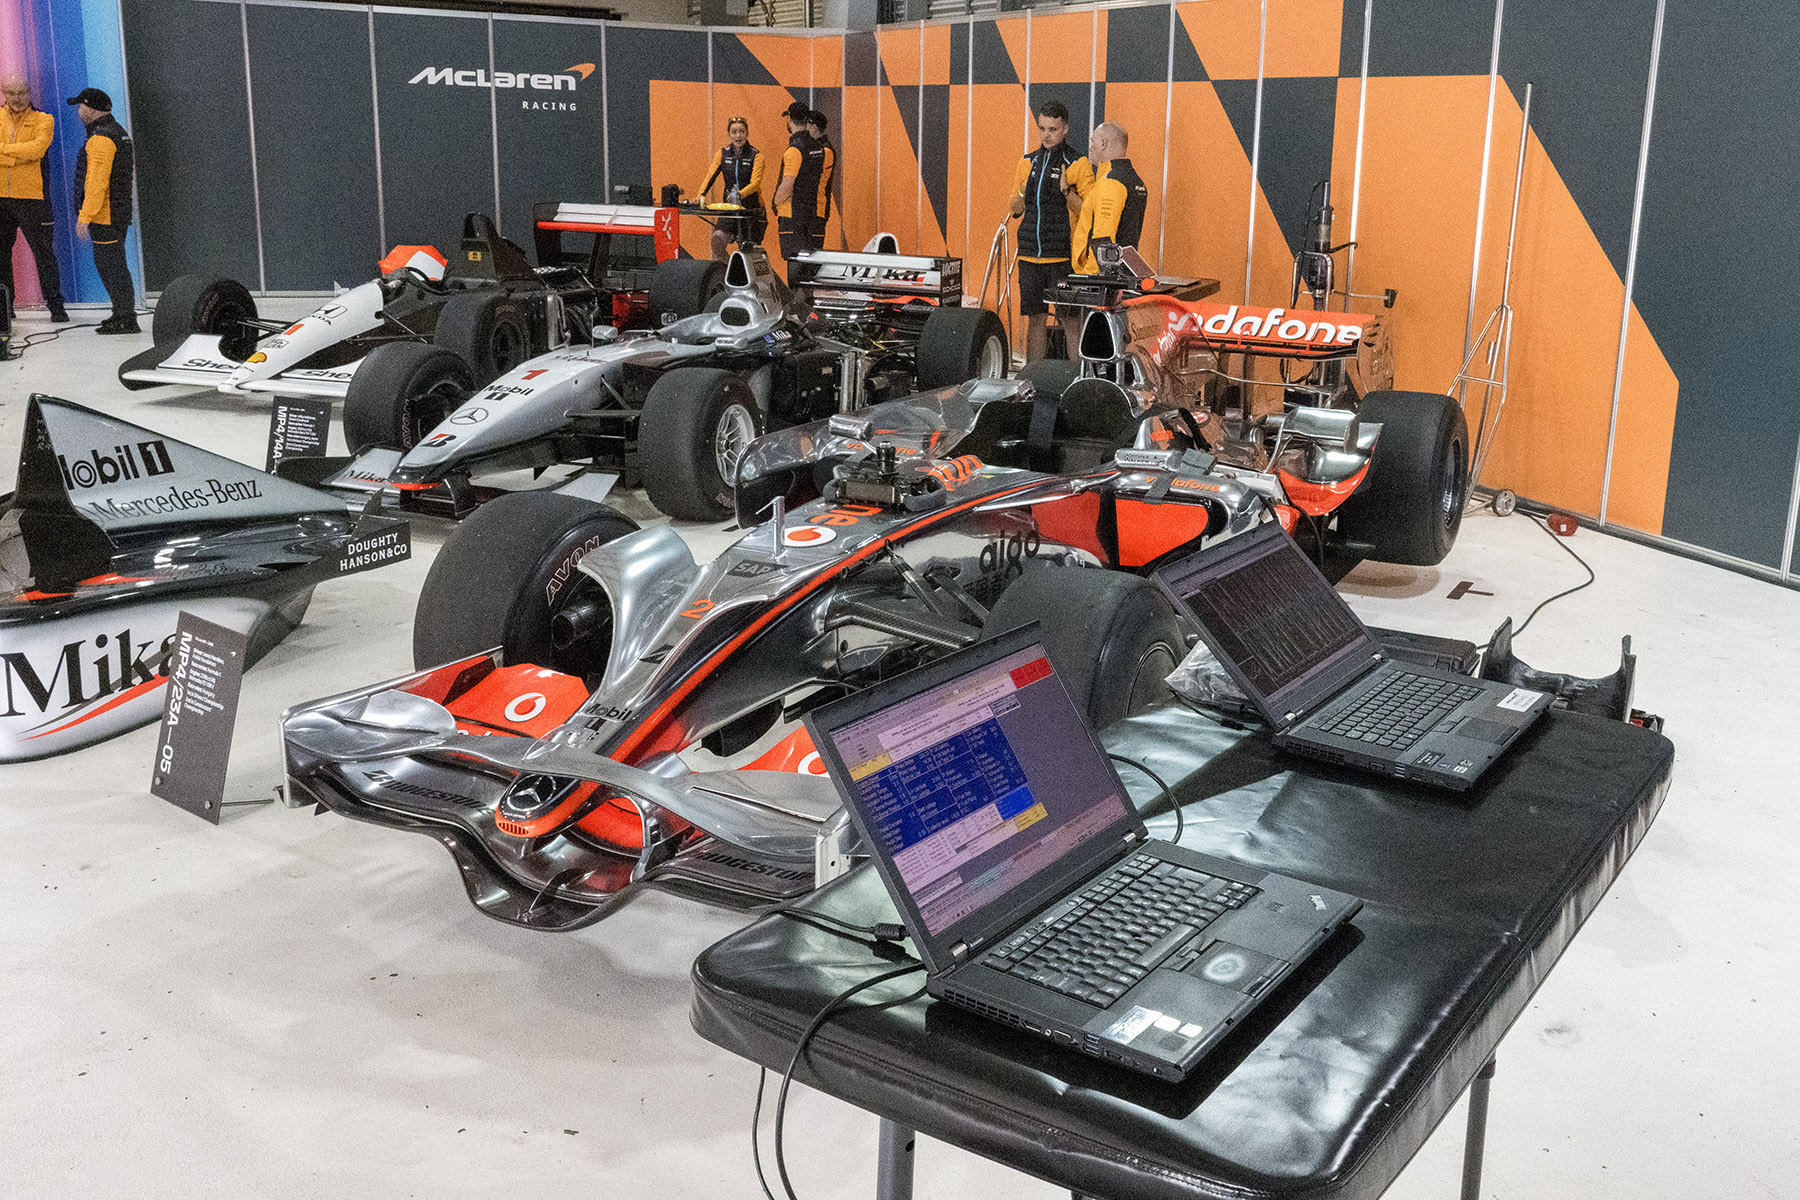 McLaren formula 1 heritage exhibit - Copyright bill@historicmotorprints.com Bill Wagenblatt